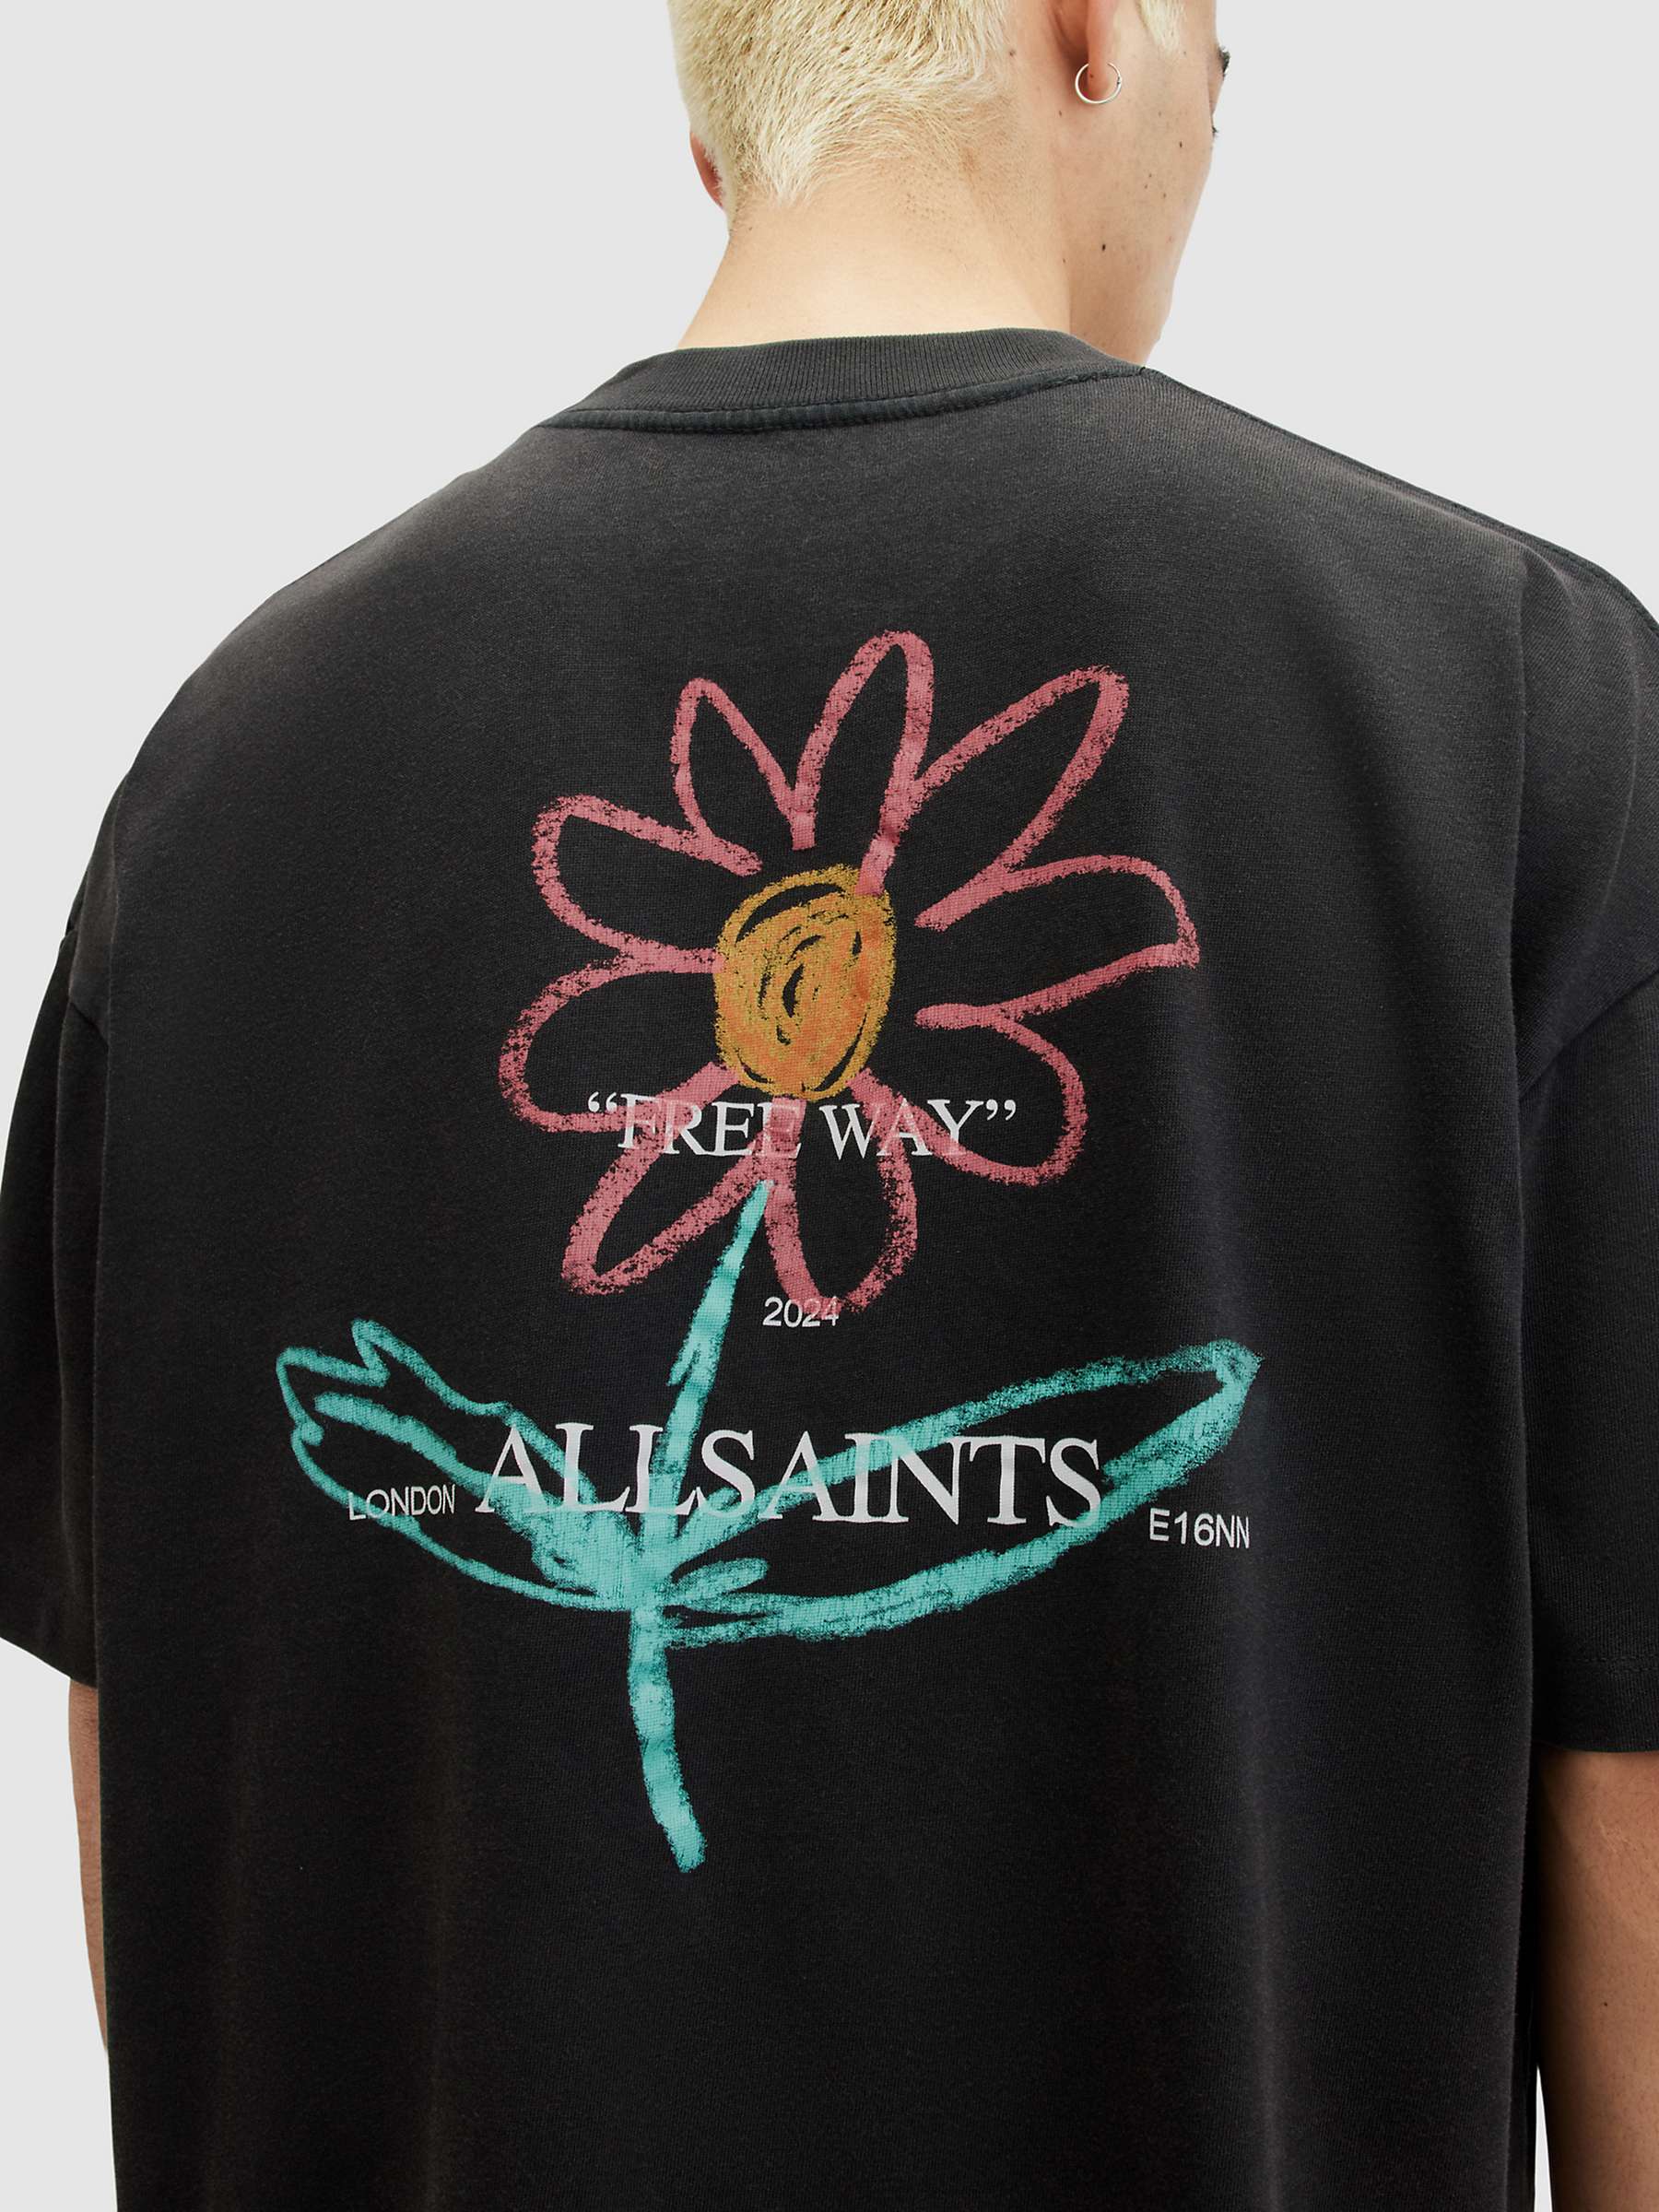 Buy AllSaints Crayo Short Sleeve Crew Neck T-Shirt, Washed Black Online at johnlewis.com